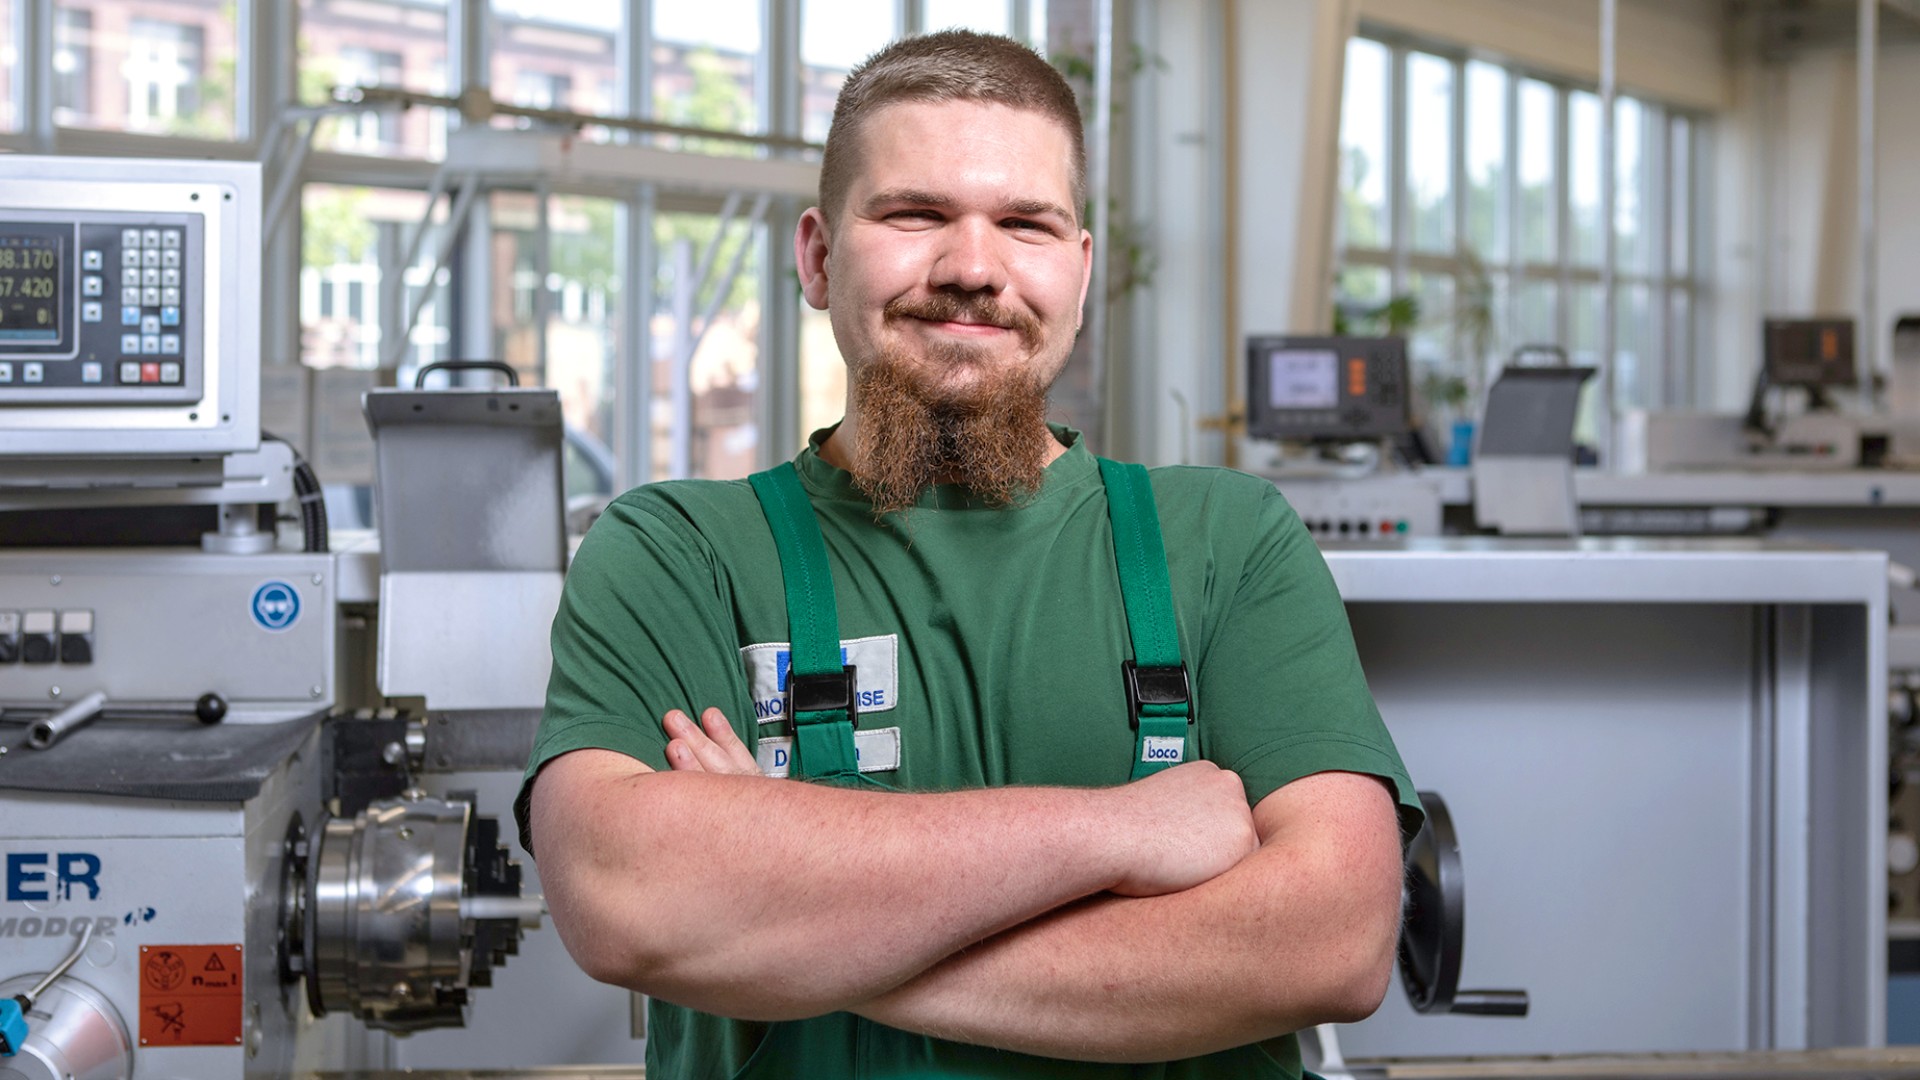 Dominik Bobon, apprentice machinist in Berlin, in front of a machine in the training workshop.